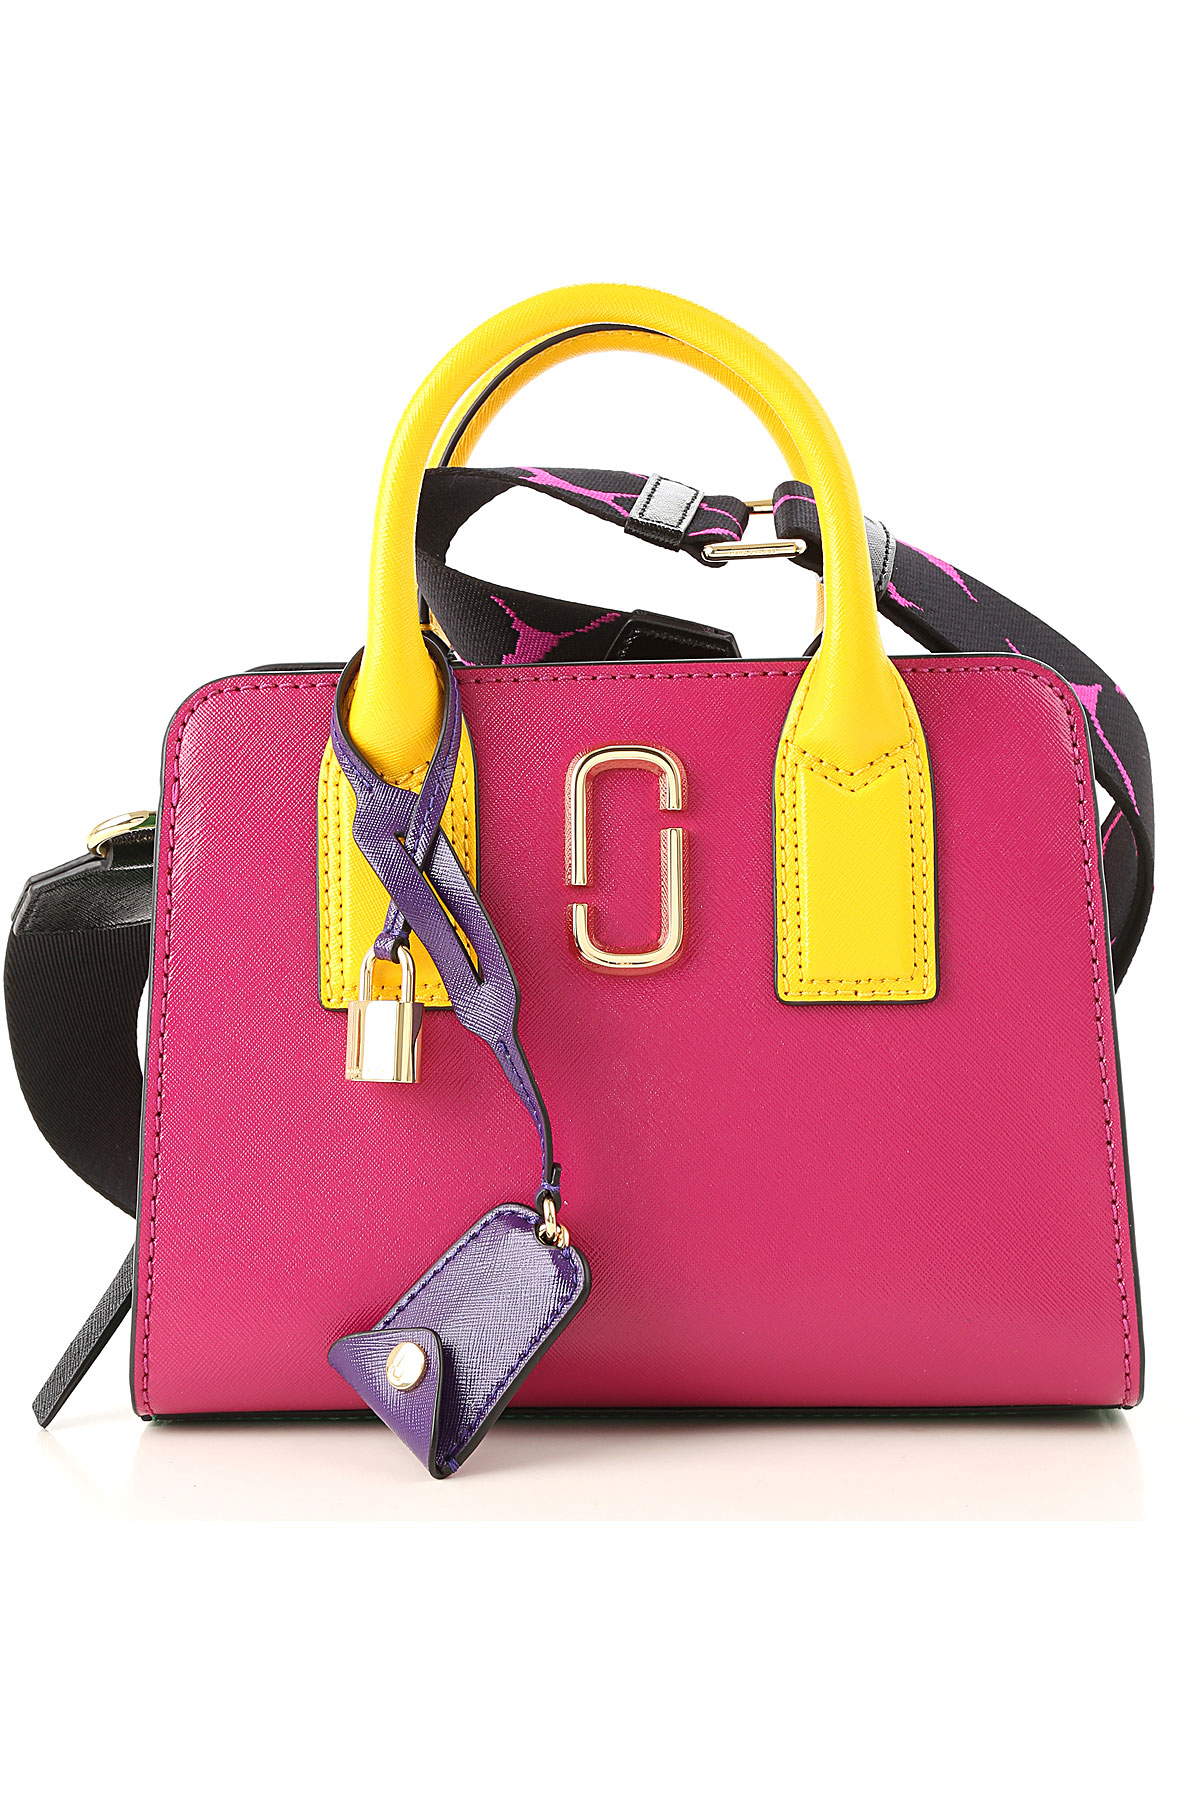 Handbags Marc Jacobs, Style code: m0013267-662-